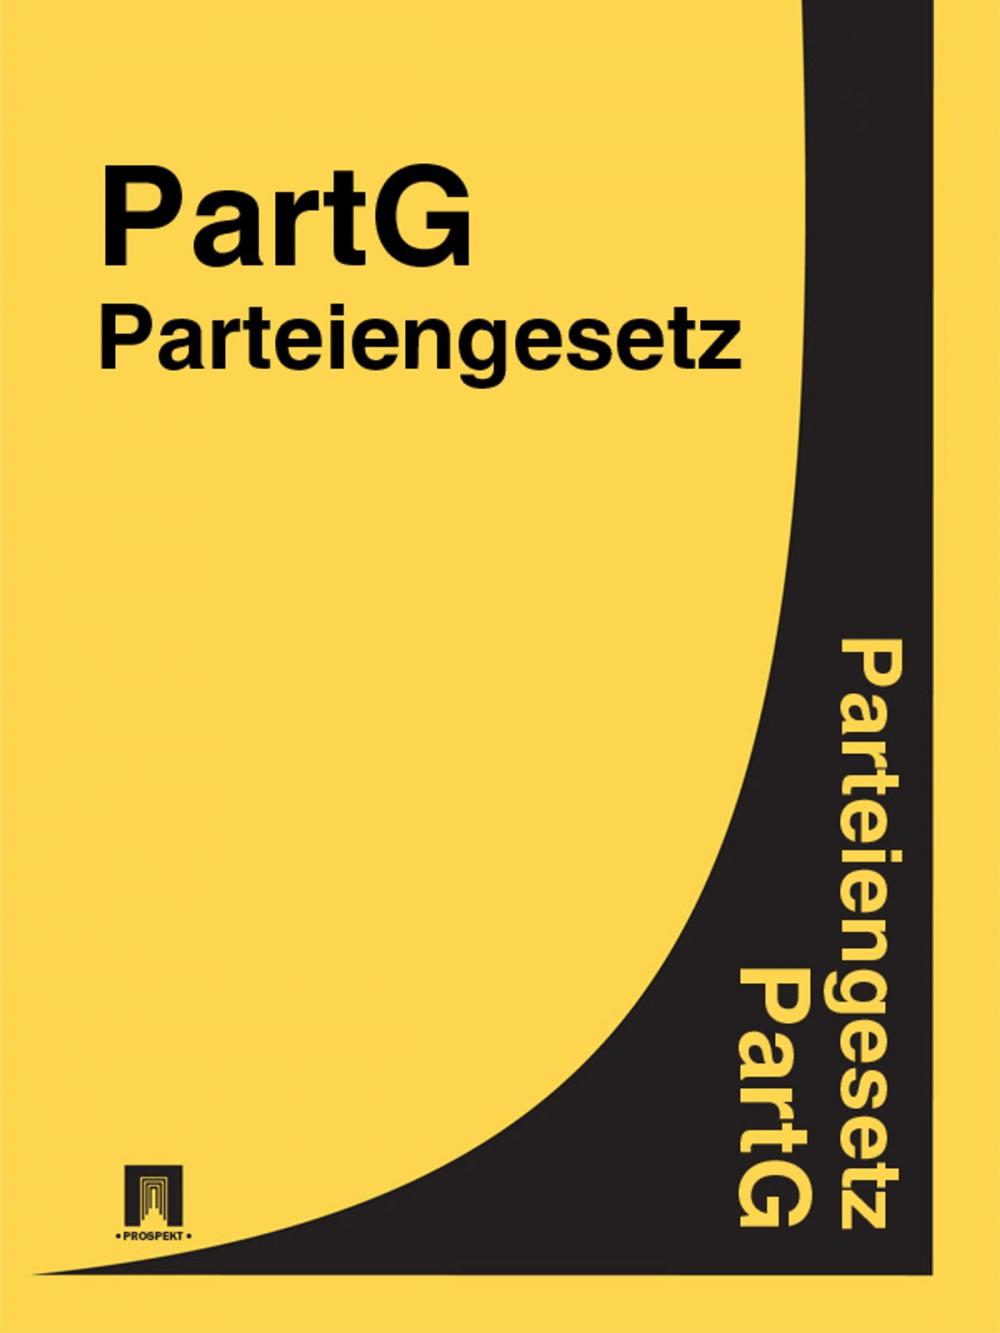 Big bigCover of Parteiengesetz - PartG